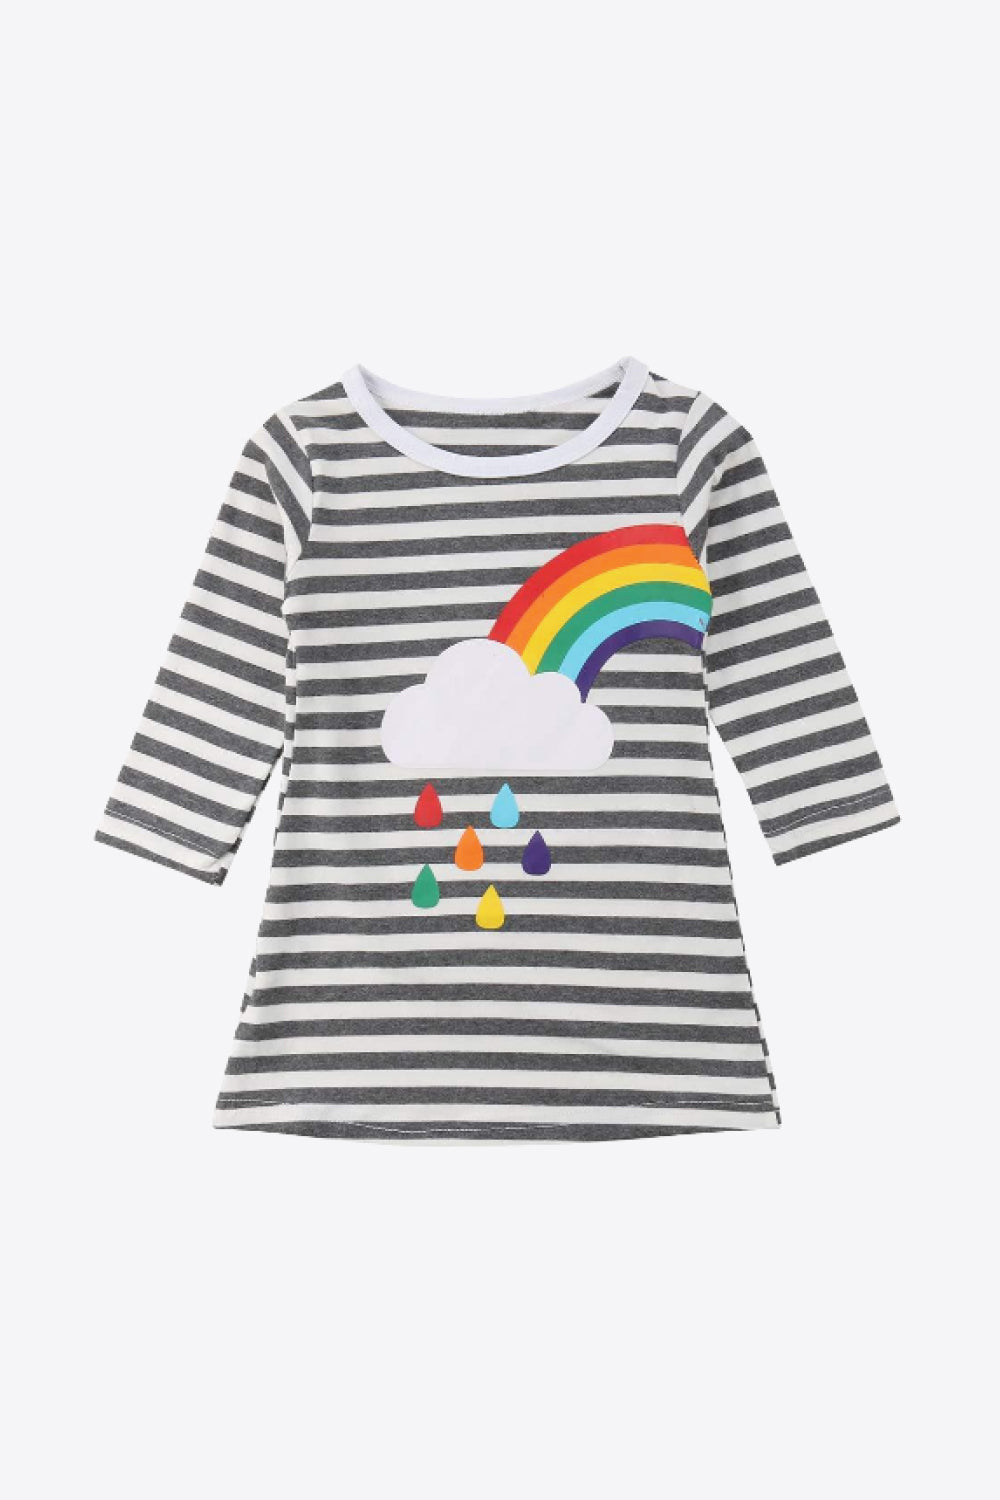 Girls Rainbow Graphic Striped Long Sleeve Dress